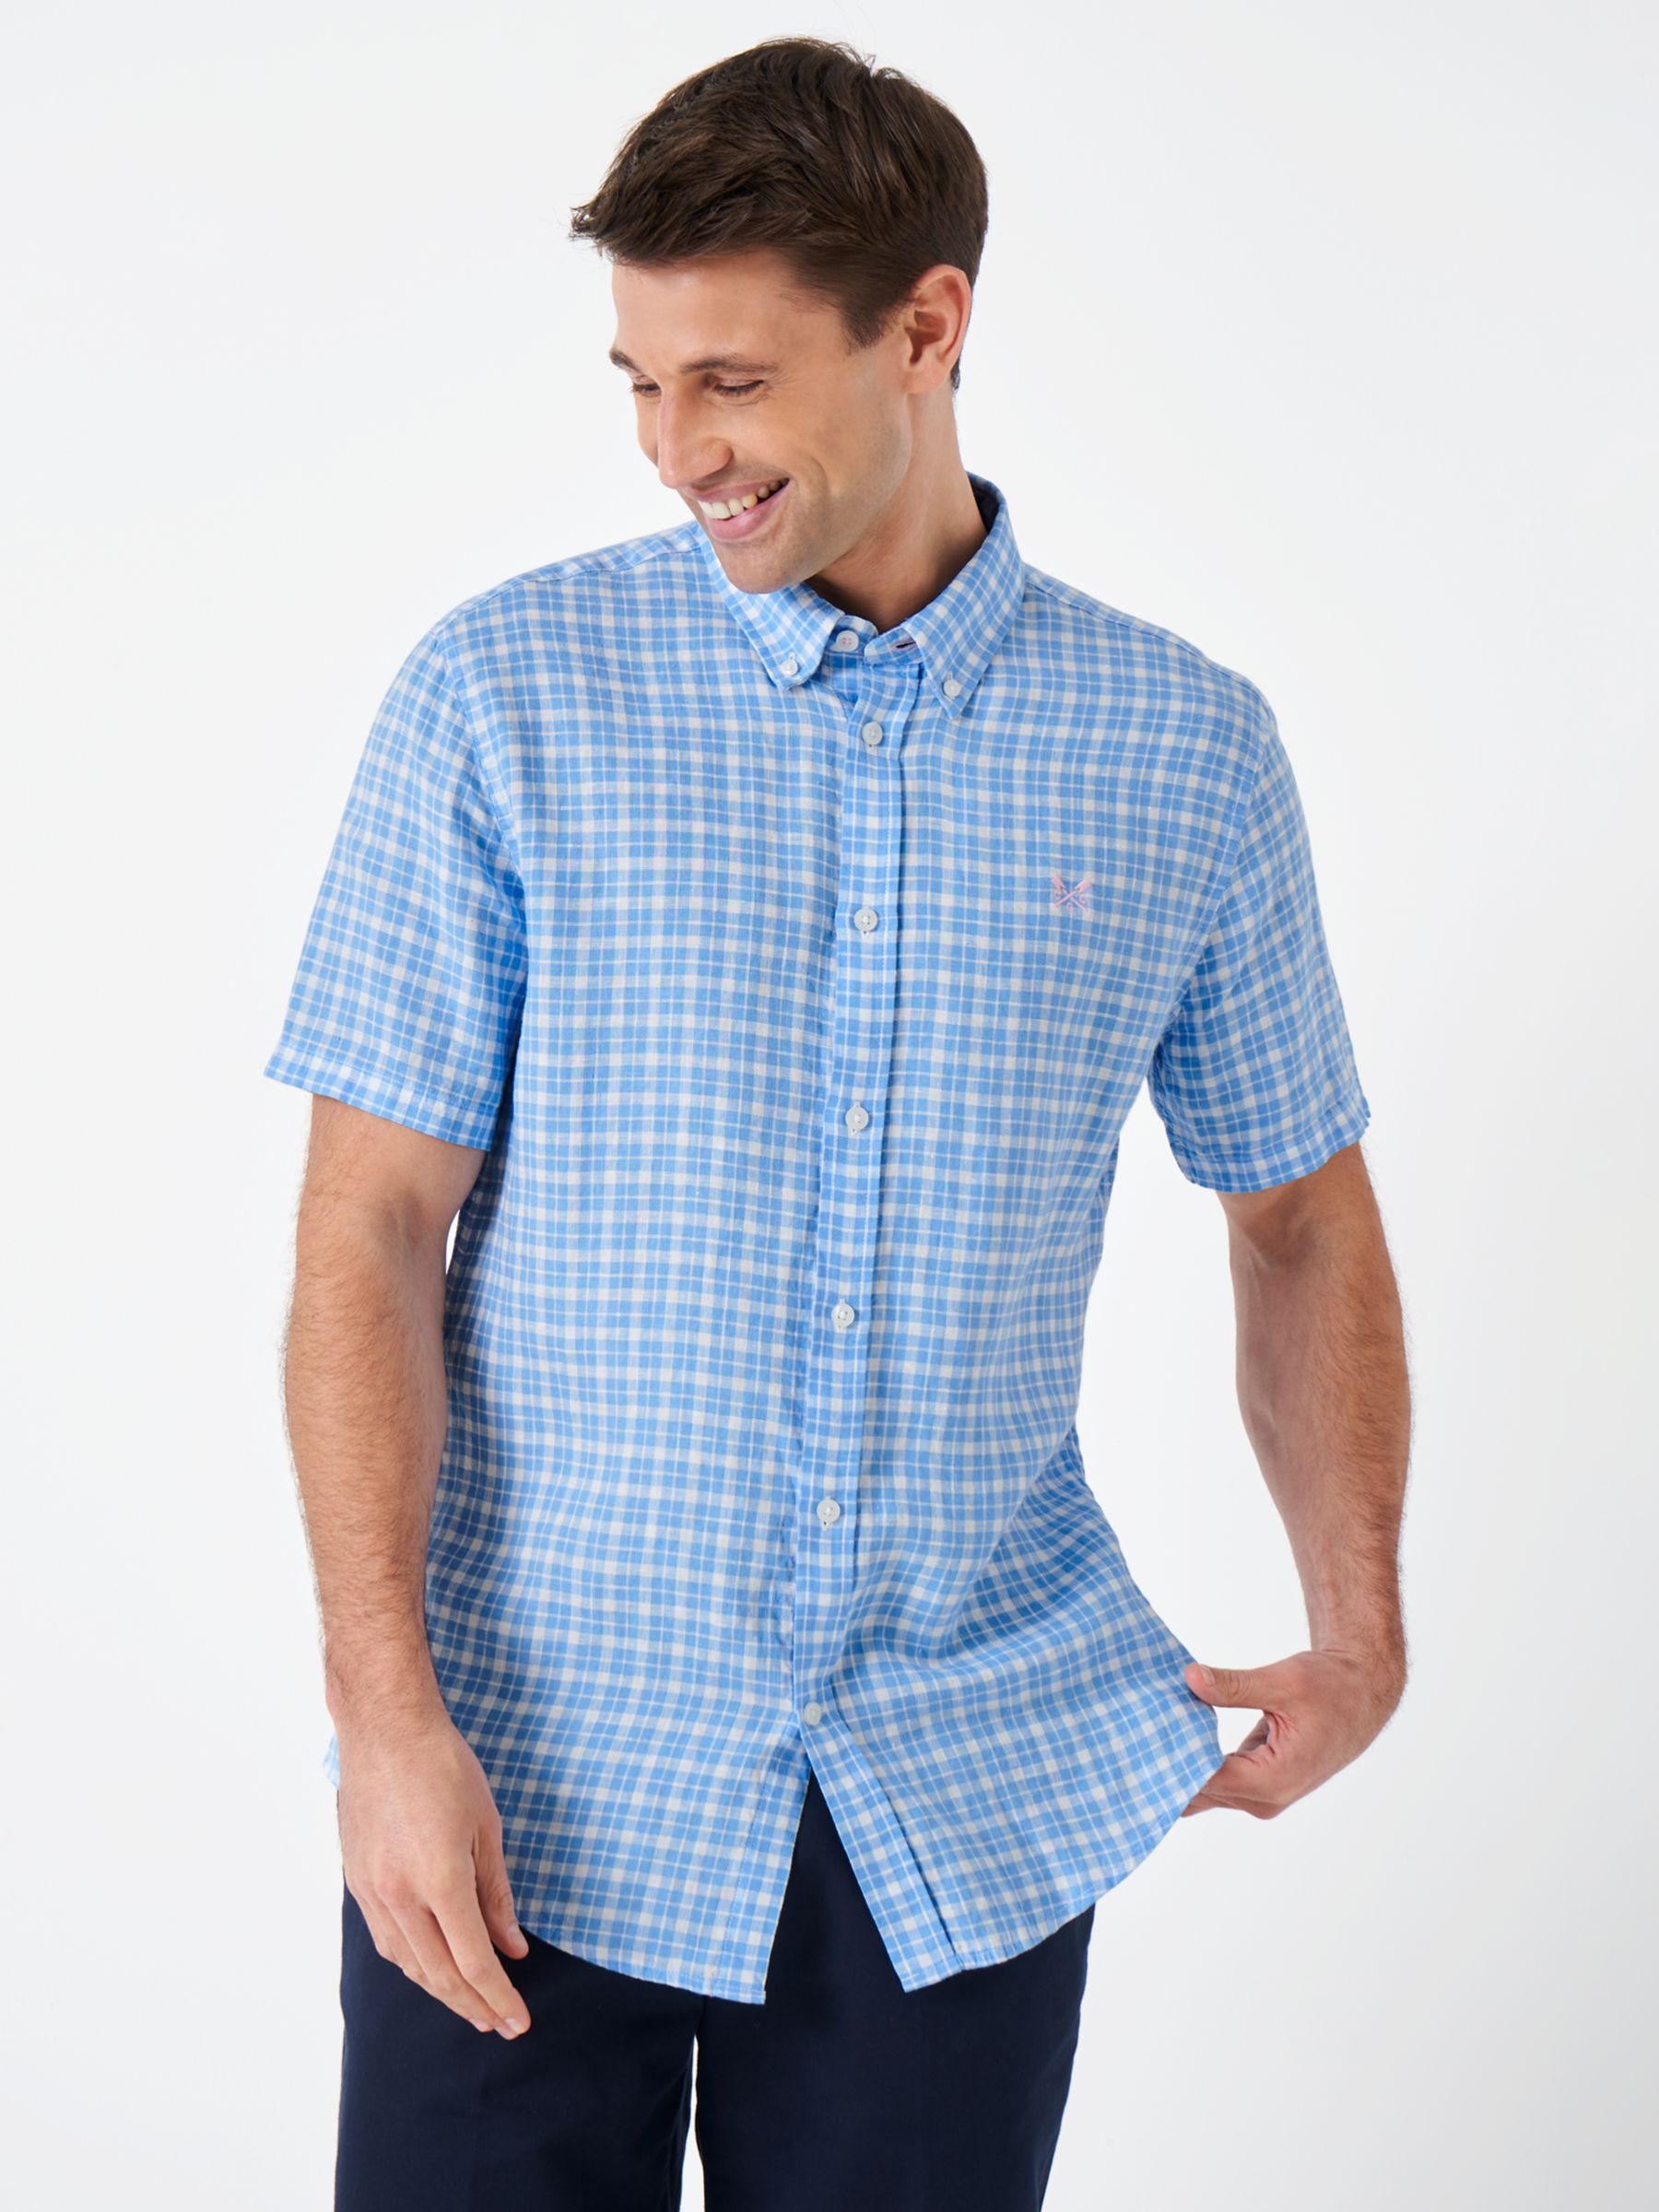 T-Shirts & Shirts, John Louis Half Sleeve Formal Blue Checkered Shirt, Size L Or 42